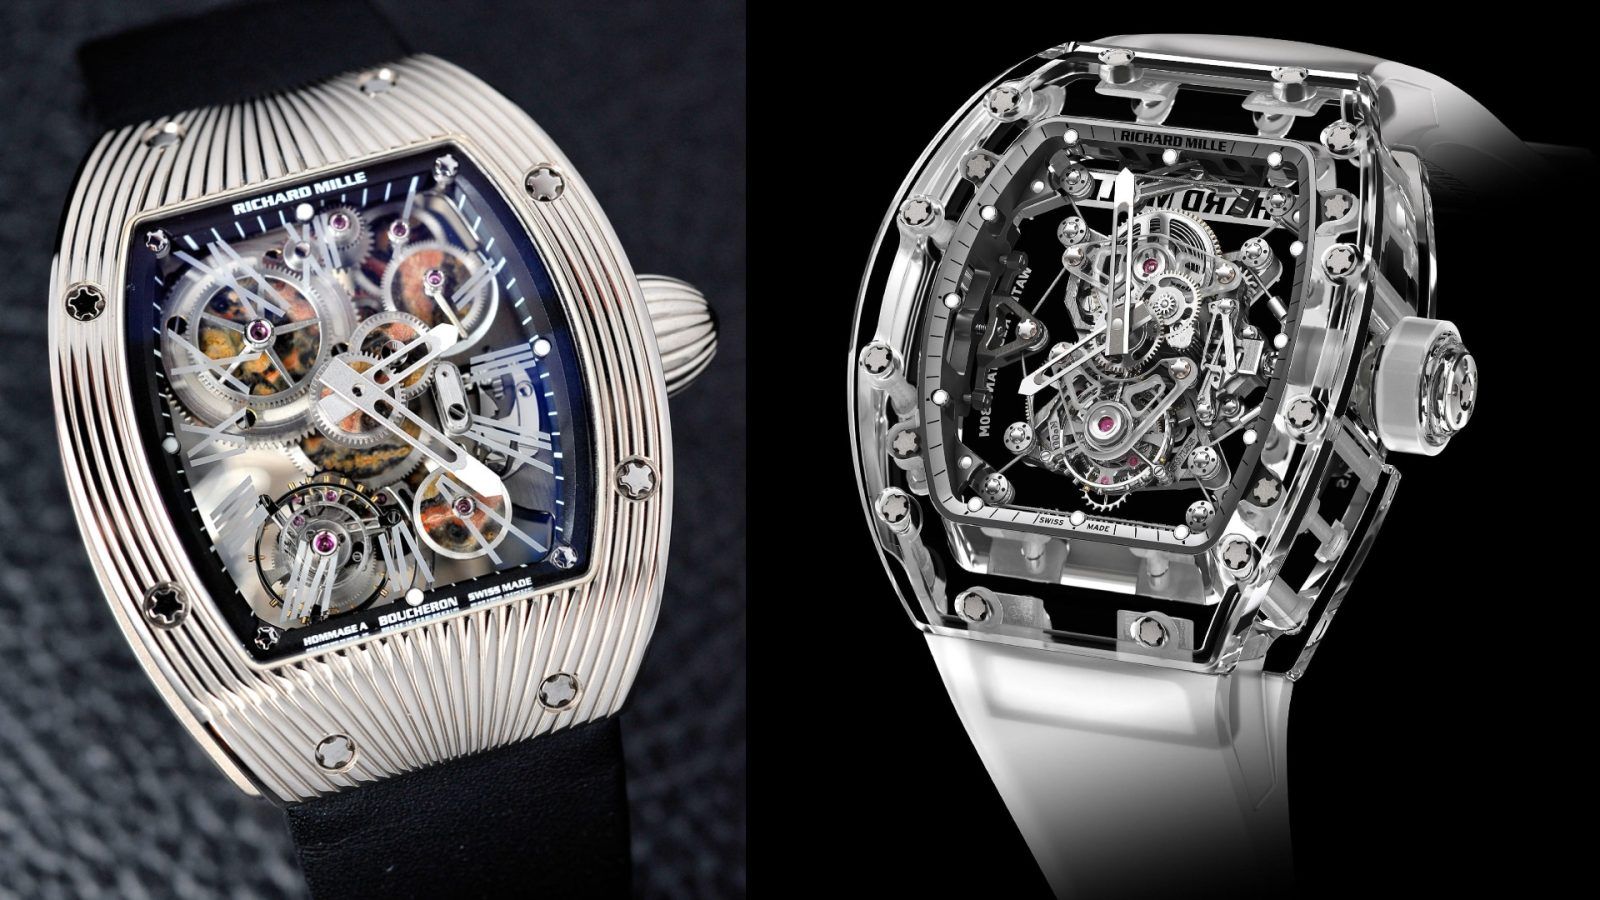 Richard Mille Unveils The RM 66 Flying Tourbillon Watch | aBlogtoWatch